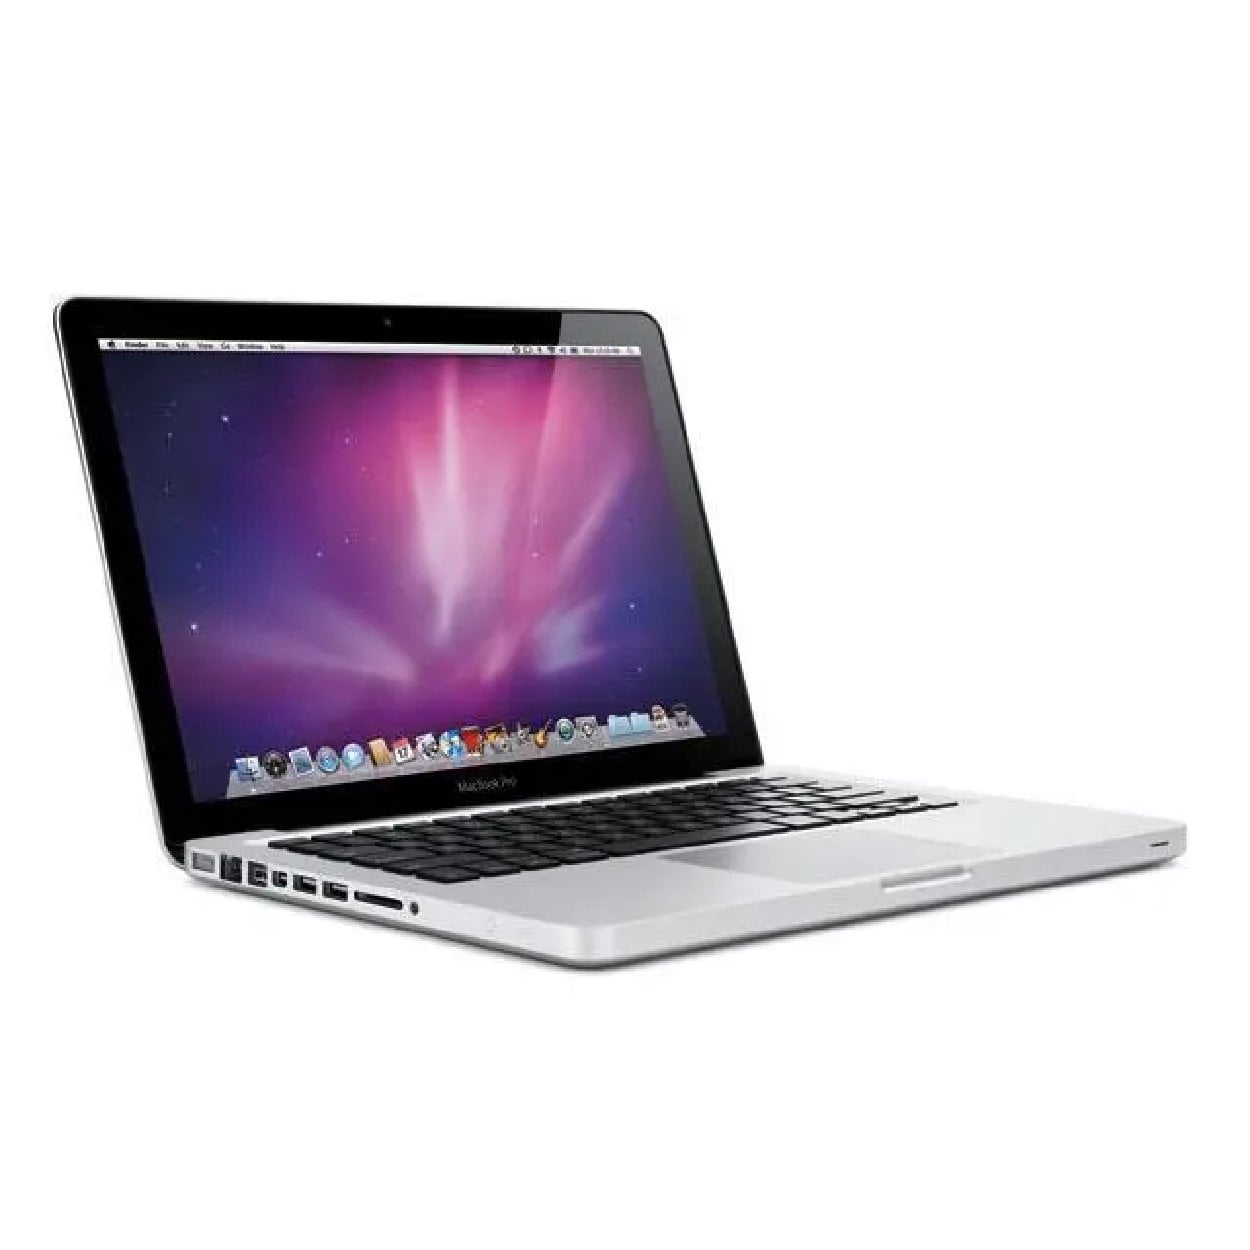 MacBook Pro 2012 i5, 4GB RAM, 500GB HDD – guava store